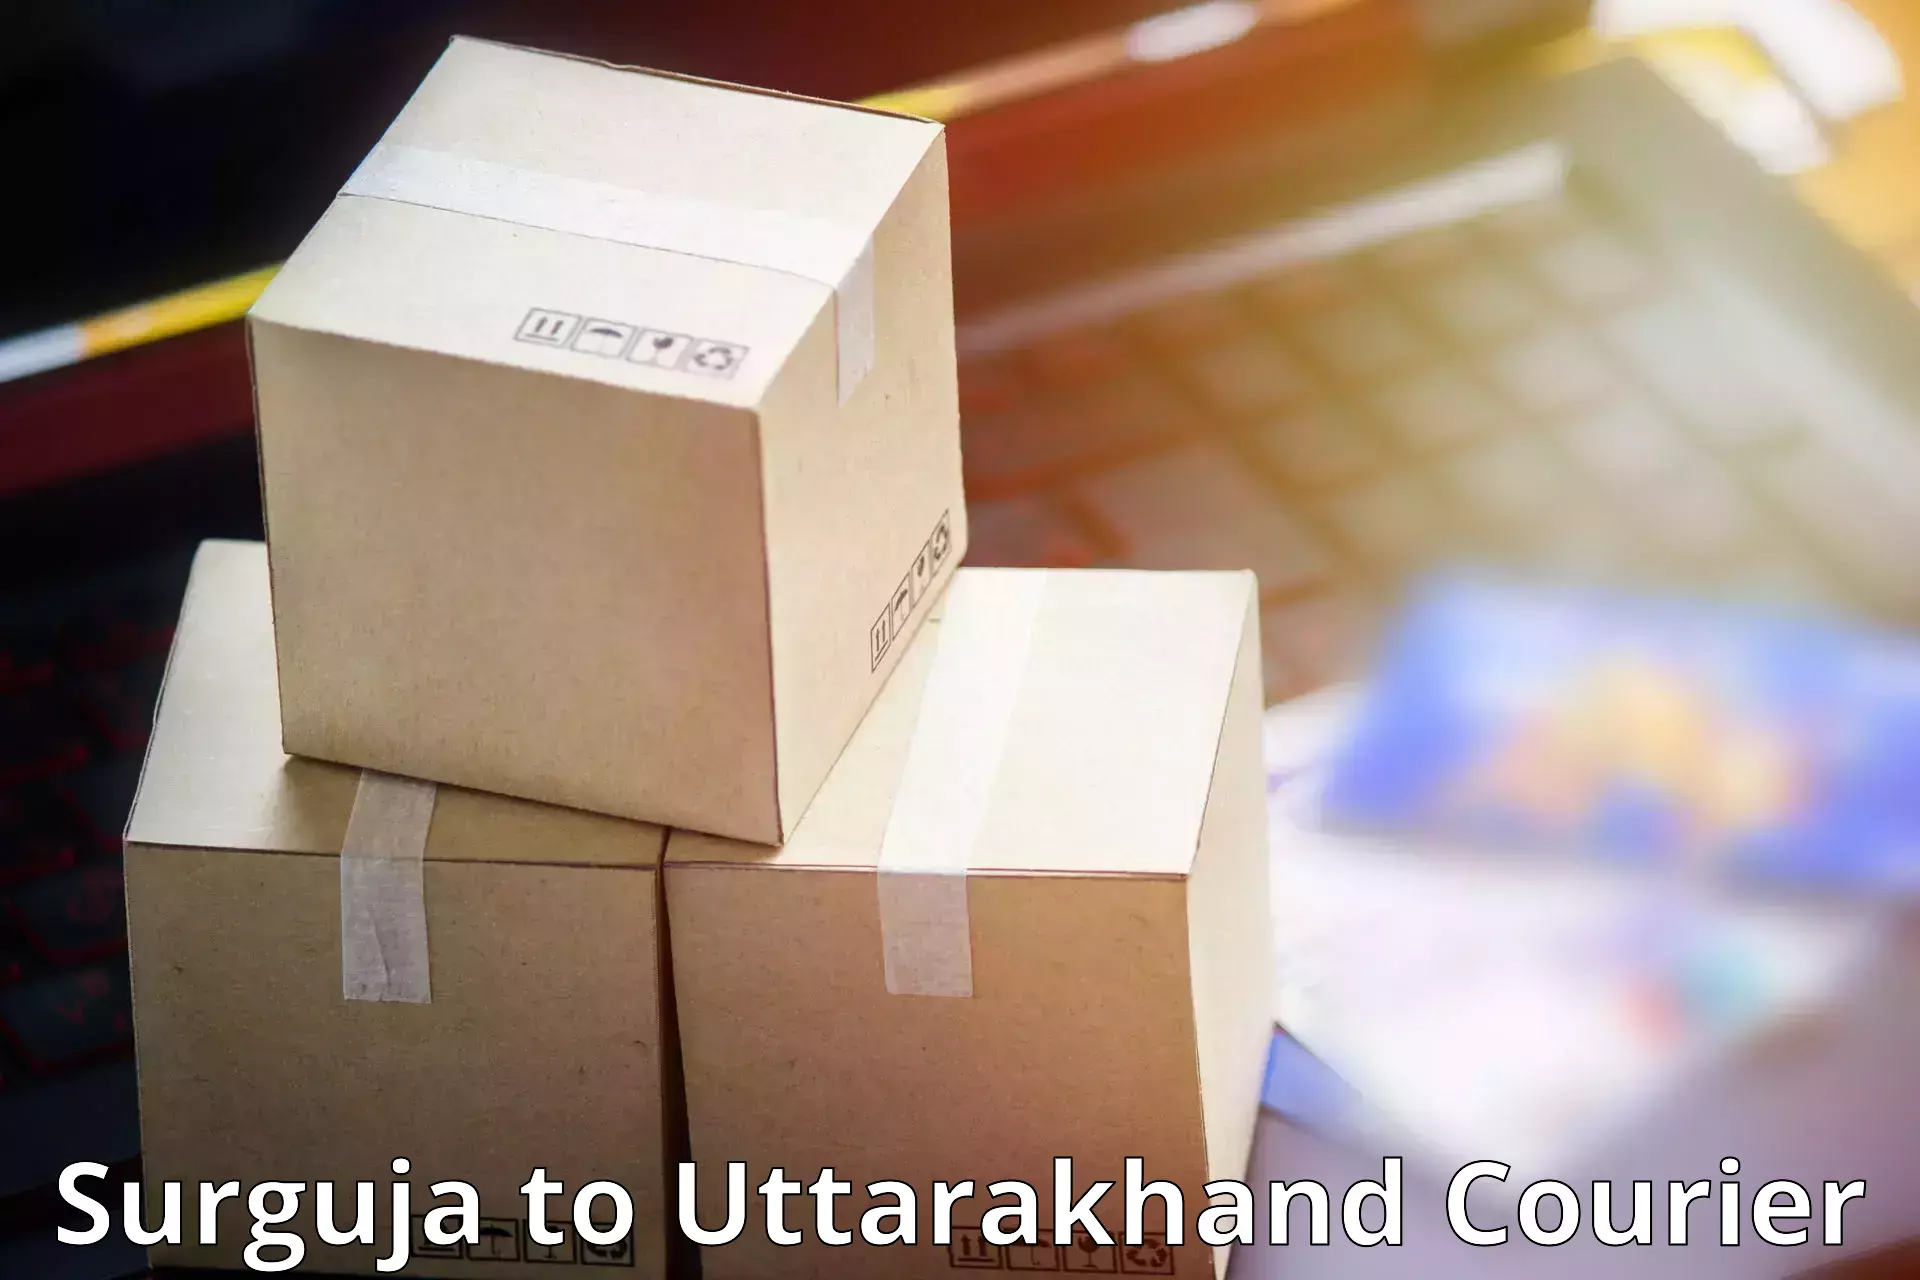 Quality courier partnerships Surguja to Doiwala